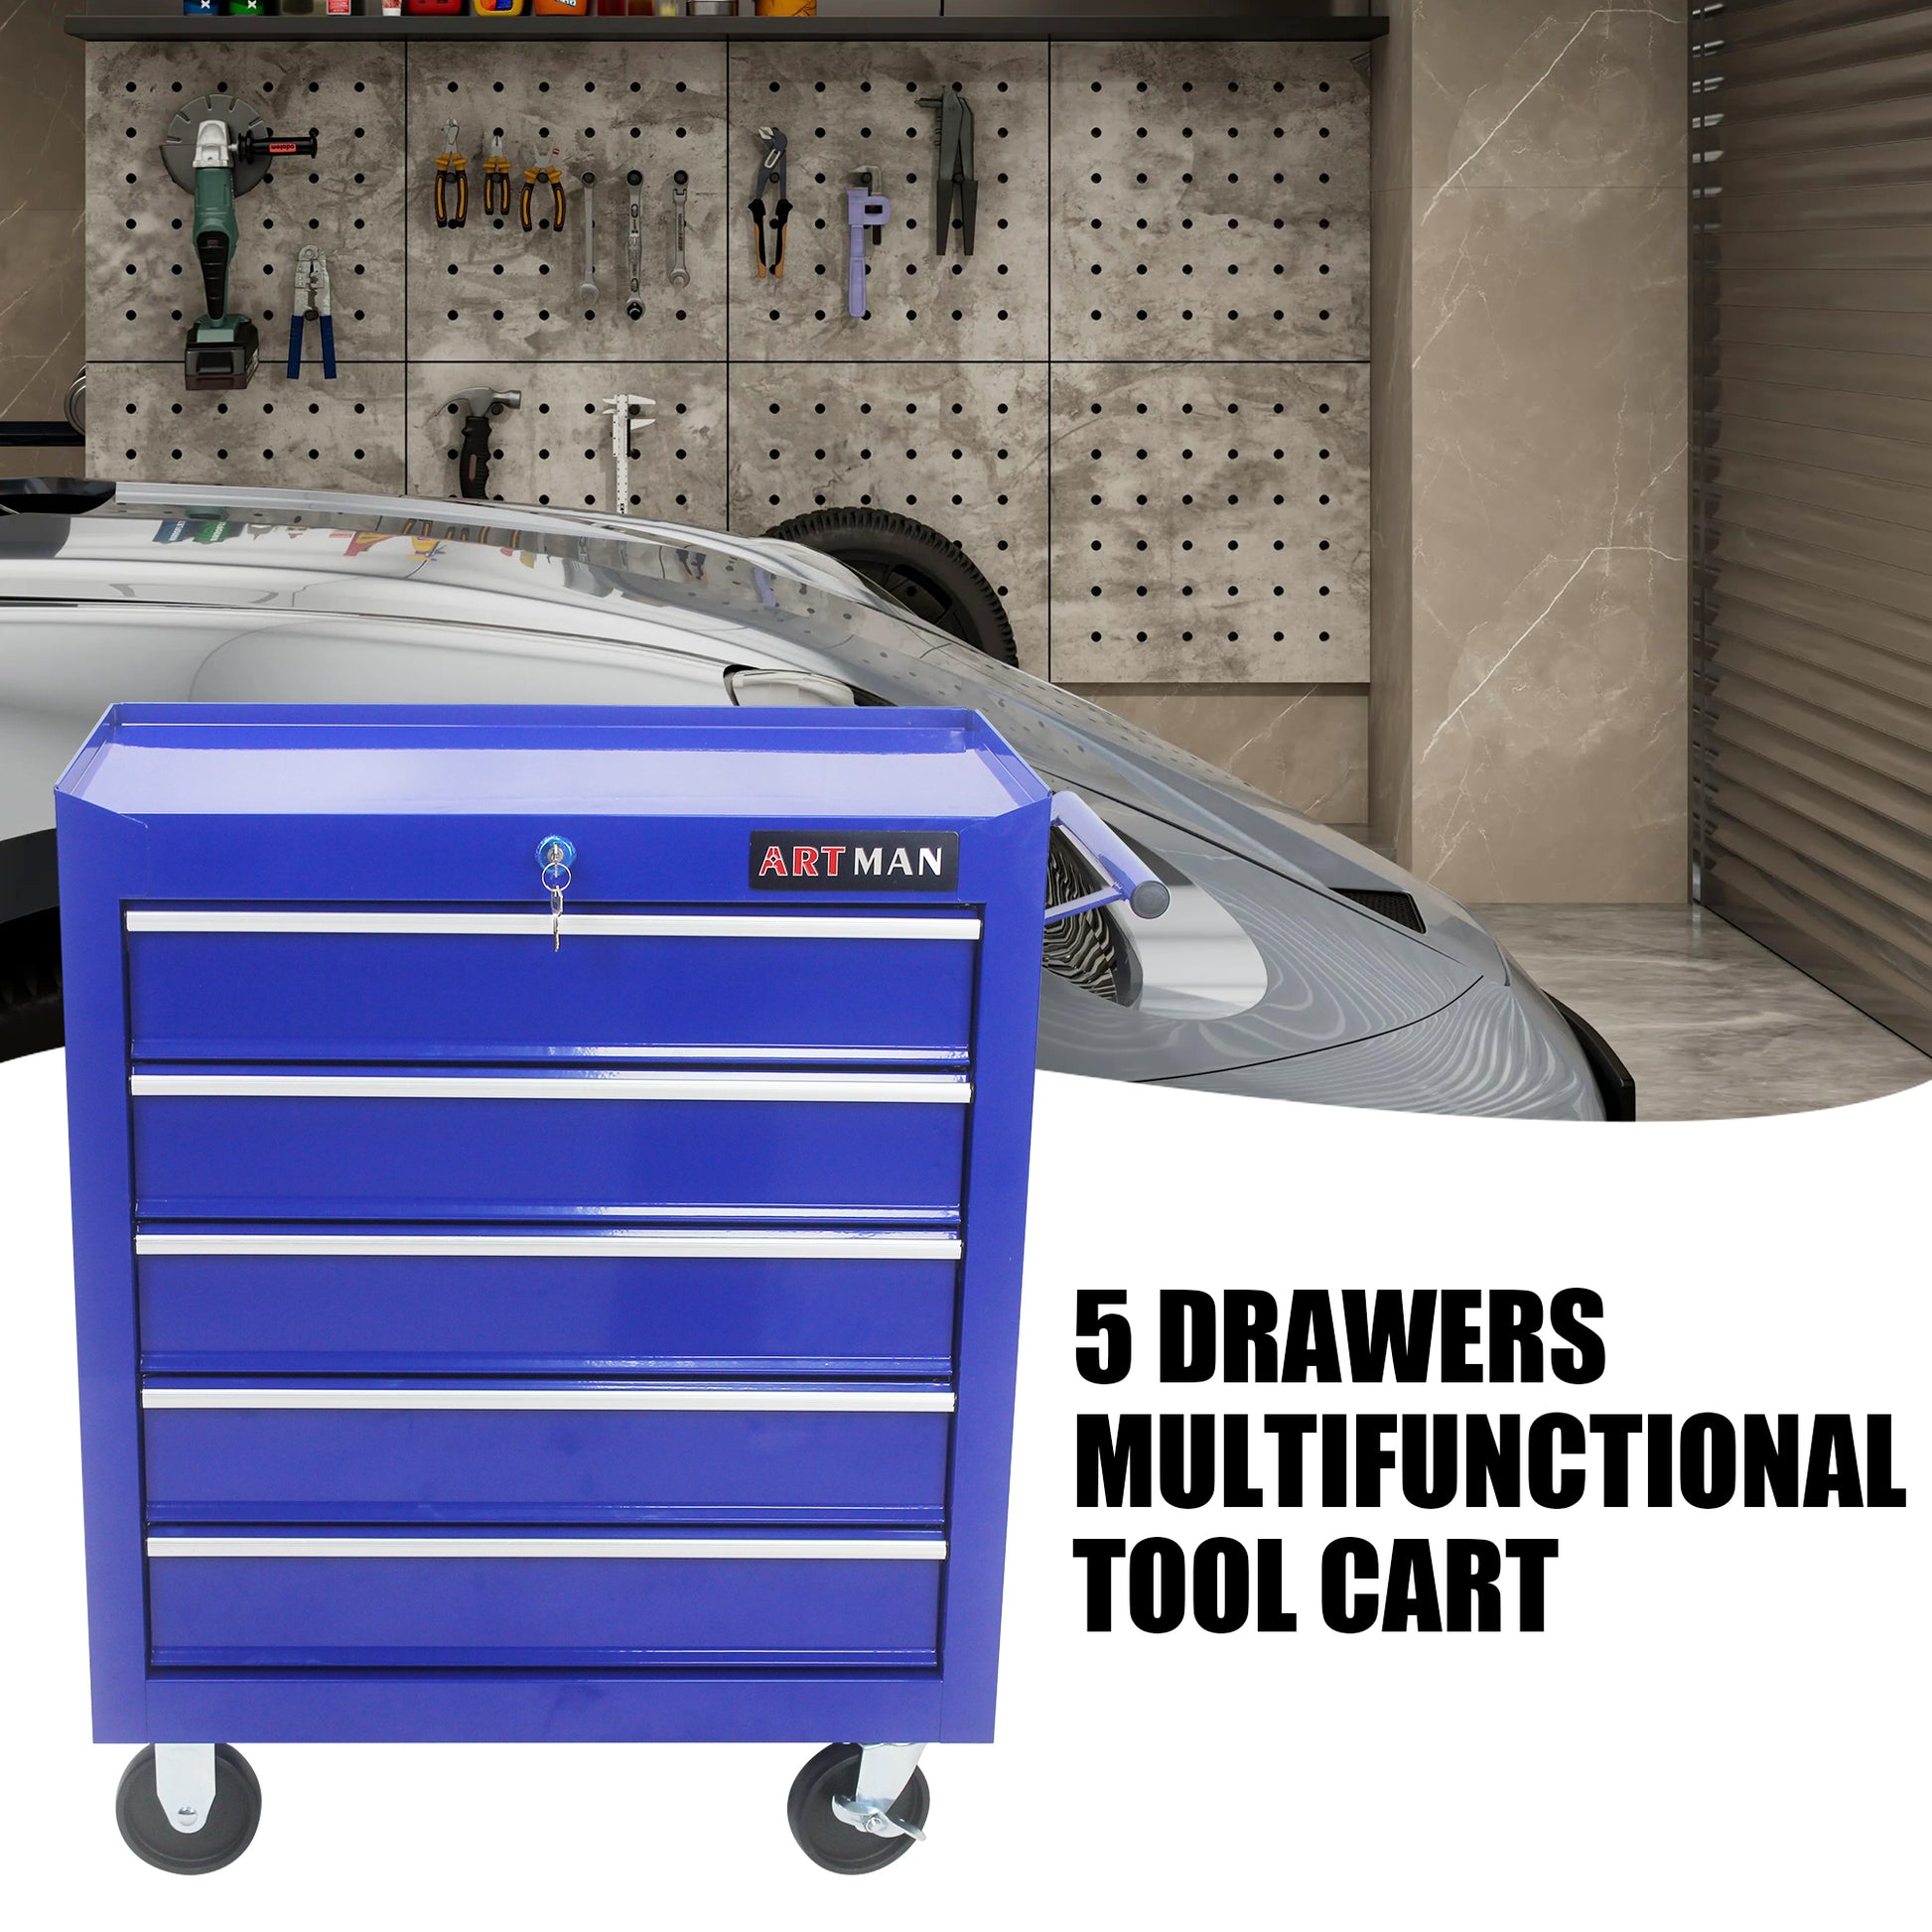 5 DRAWERS MULTIFUNCTIONAL TOOL CART WITH WHEELS BLUE blue-steel